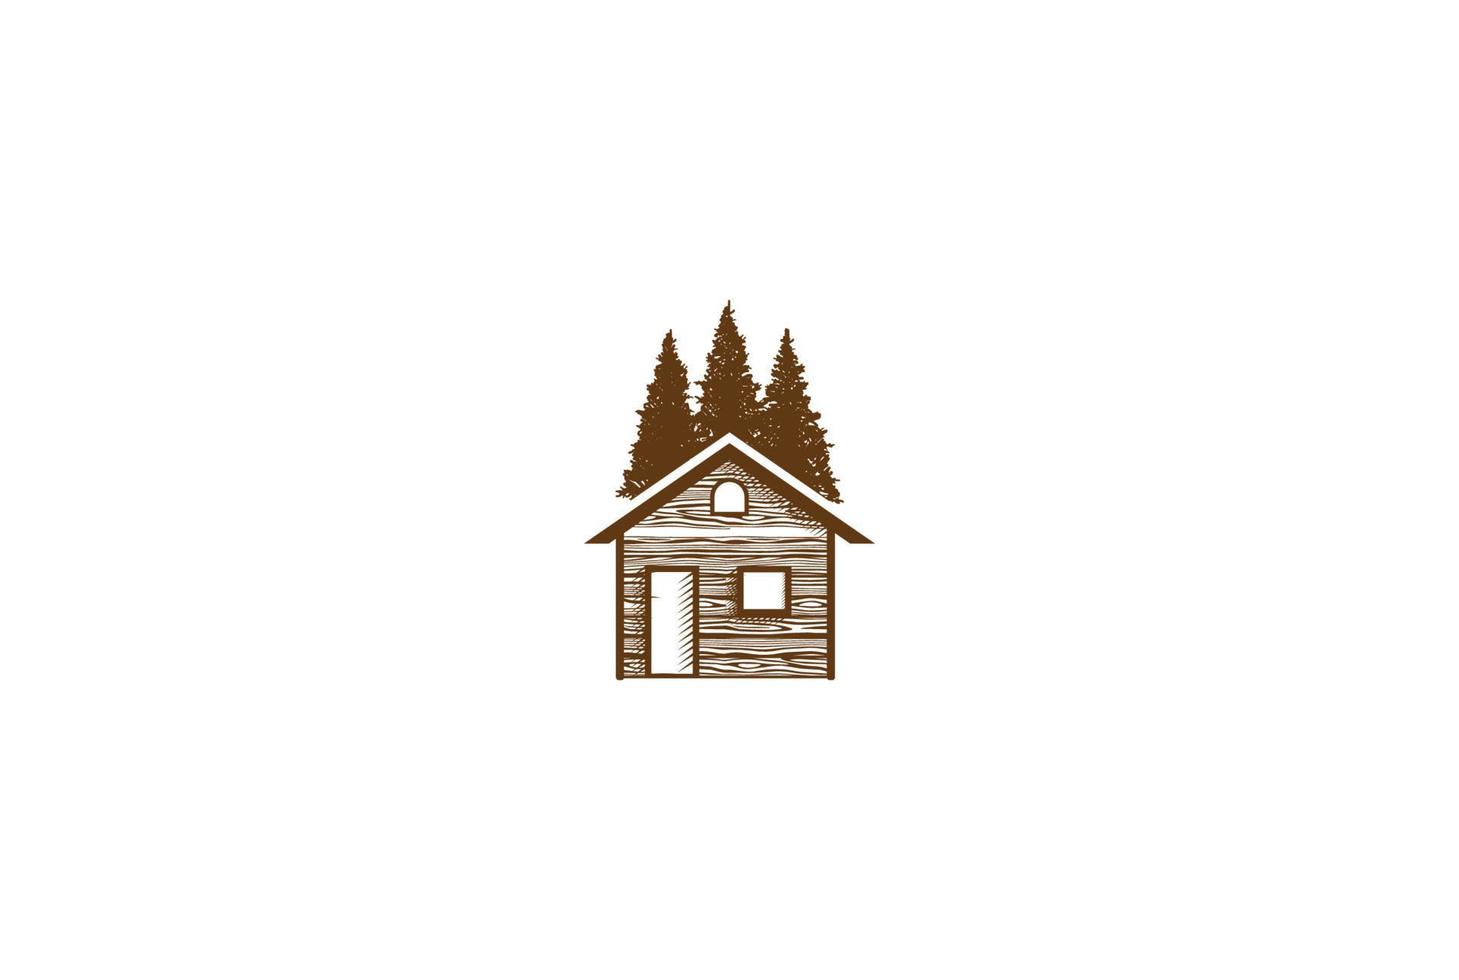 Pine Cedar Spruce Cypress Tree Forest Wooden House Cabin Real Estate Logo Design Vector